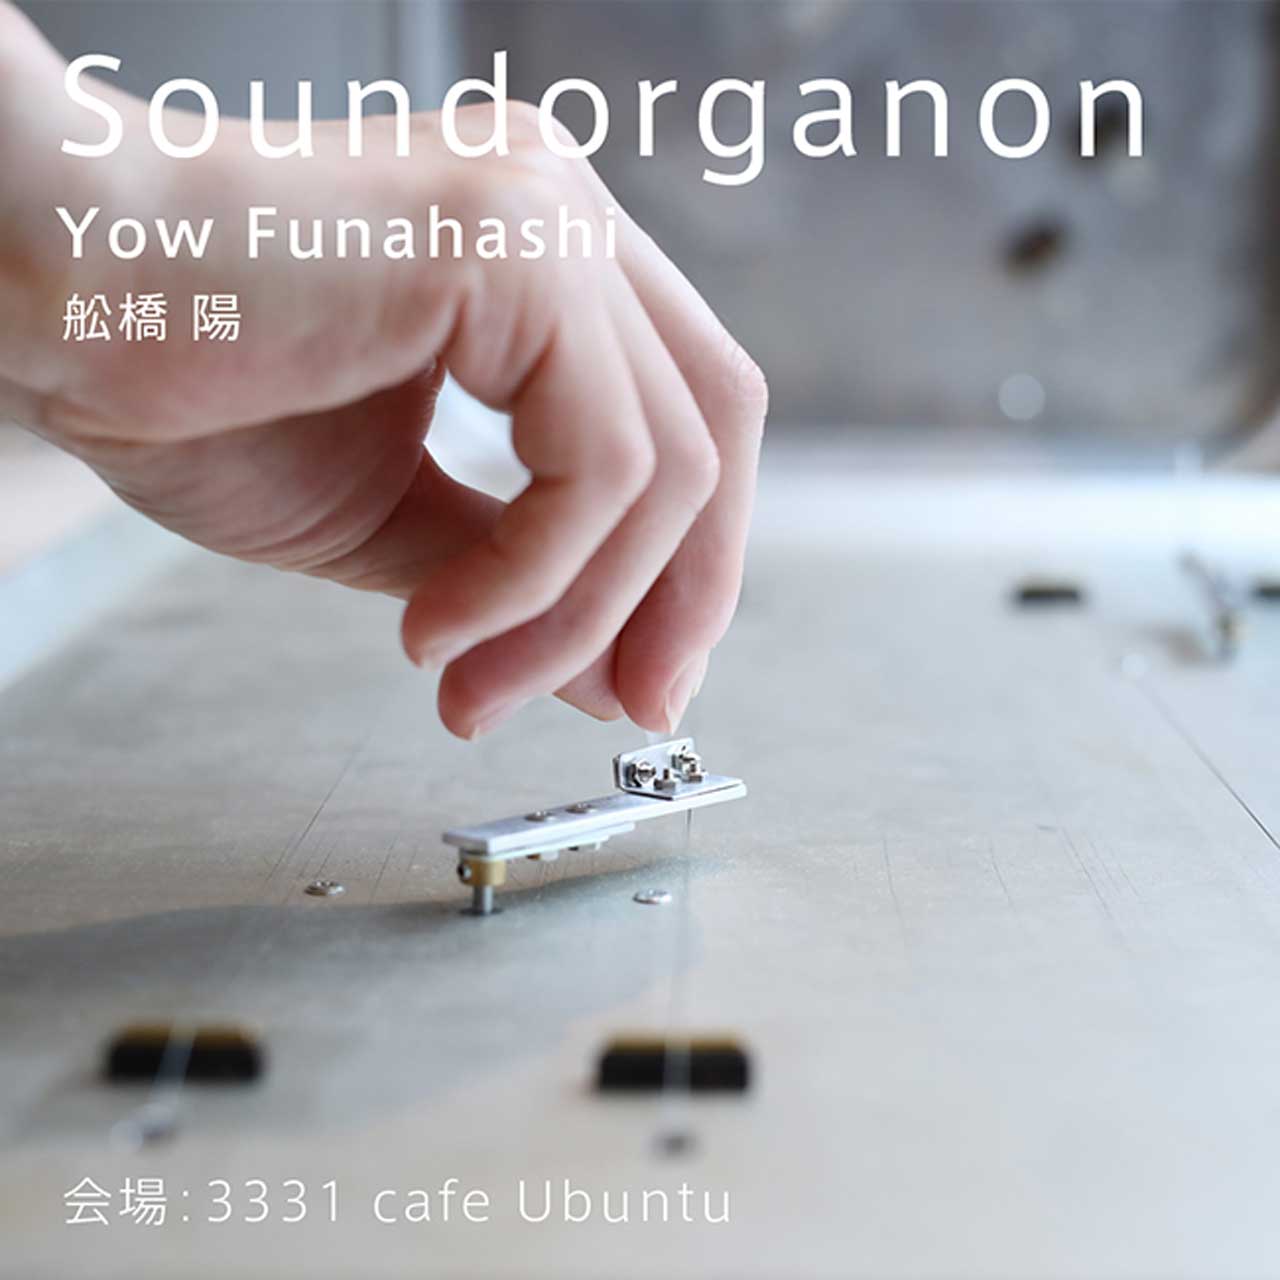 "Live Soundorganon" at 3331 cafe Ubuntu